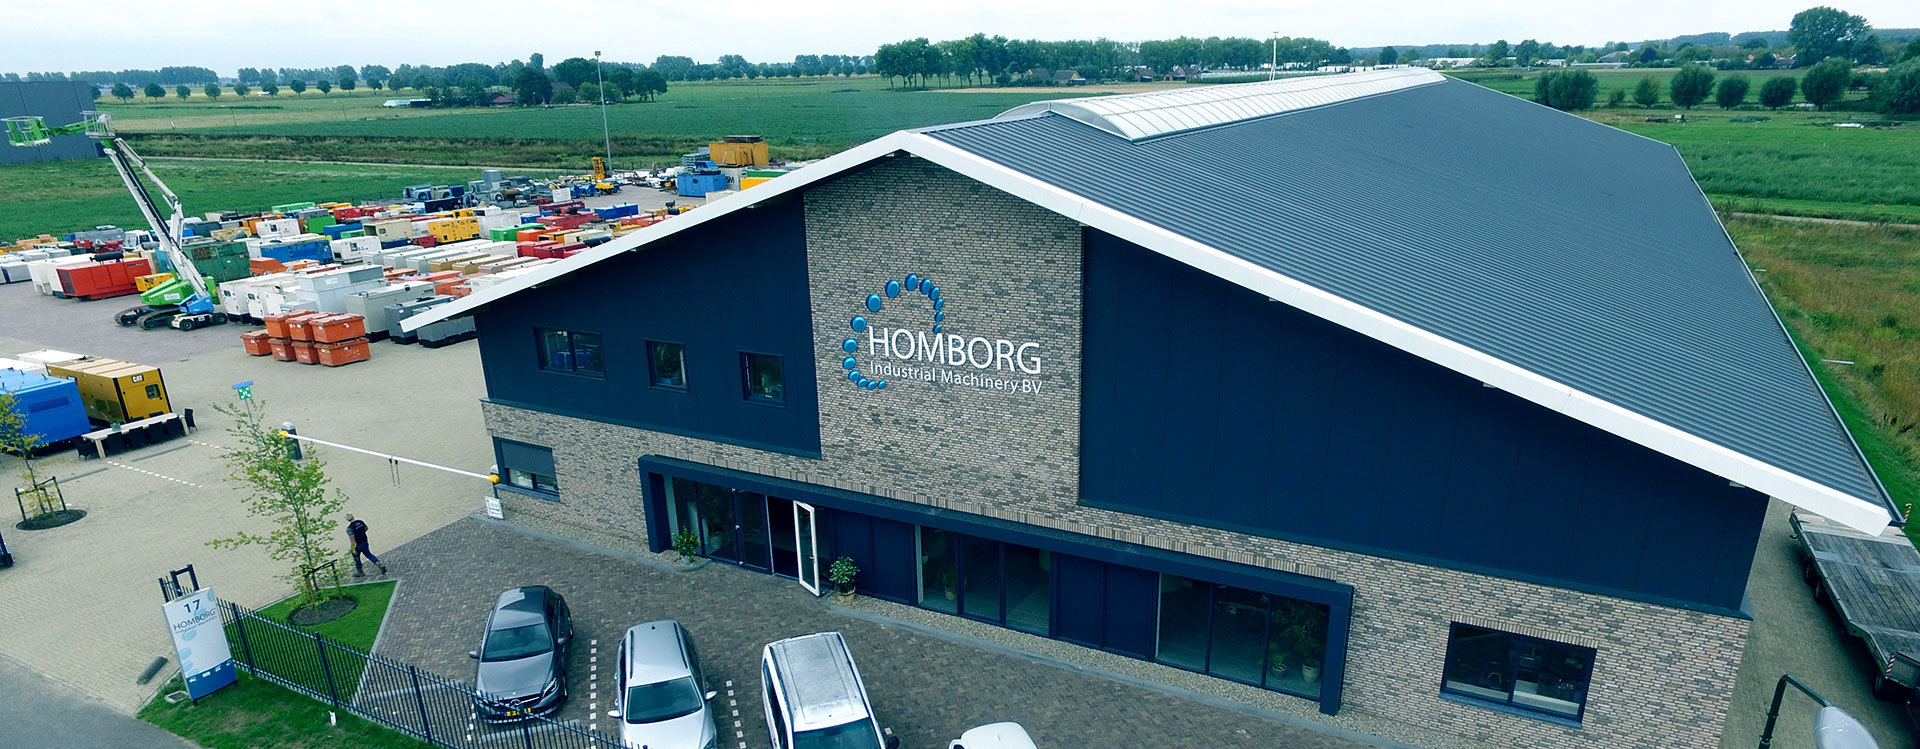 Homborg Industrial Machinery B.V.  - Autres matériels undefined: photos 1